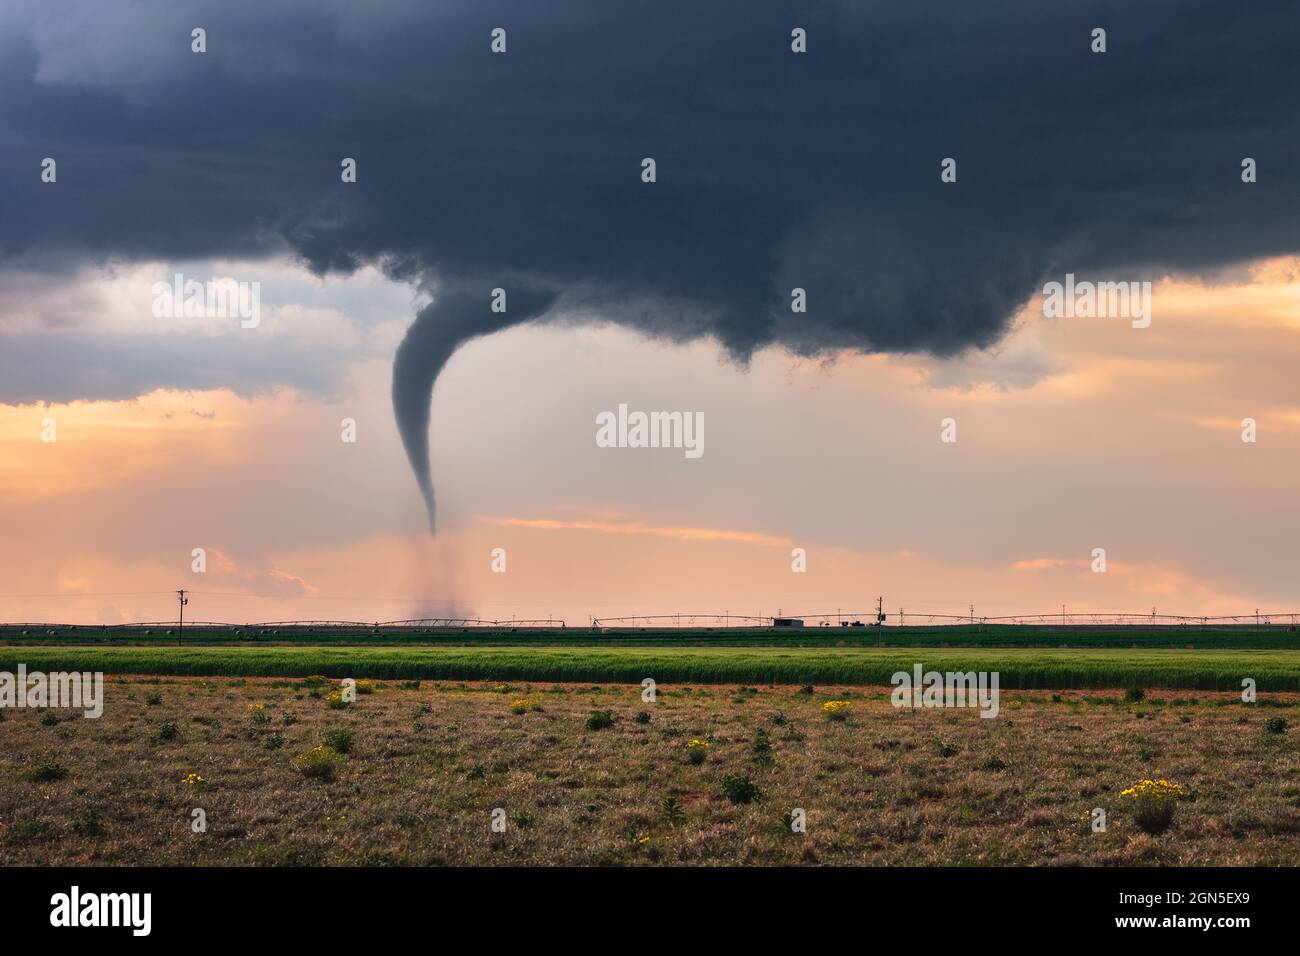 Supercell tornado dramatic wall cloud kicks up dust in a field during a storm near Sudan, Texas, USA Stock Photo